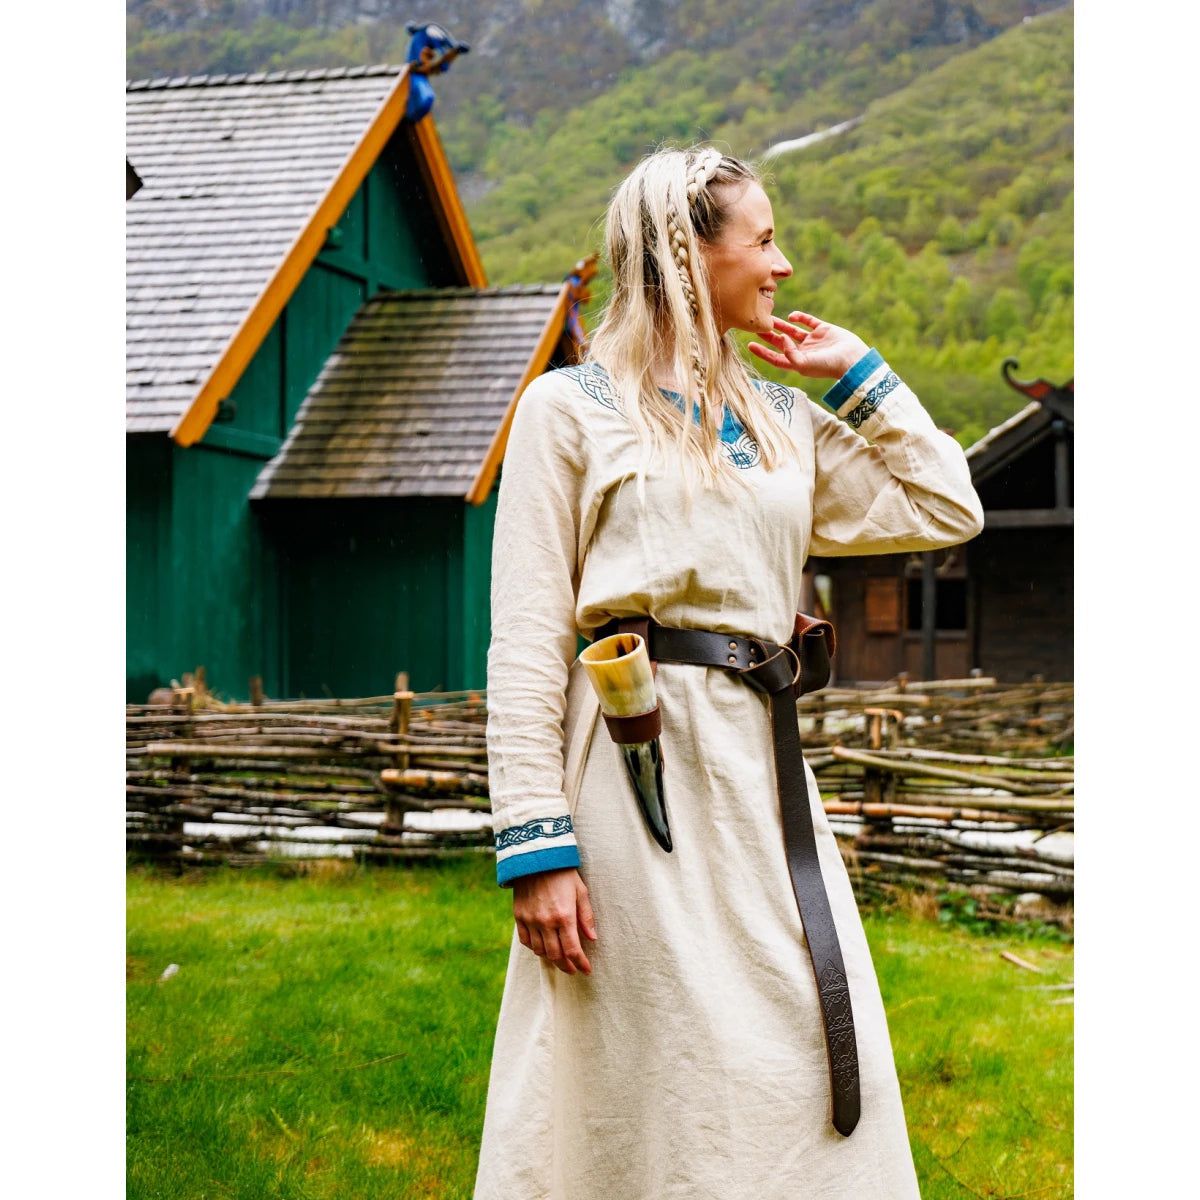 Viking Dress in Natural Cotton with Blue Trim - Elegance Meets Warrior Spirit